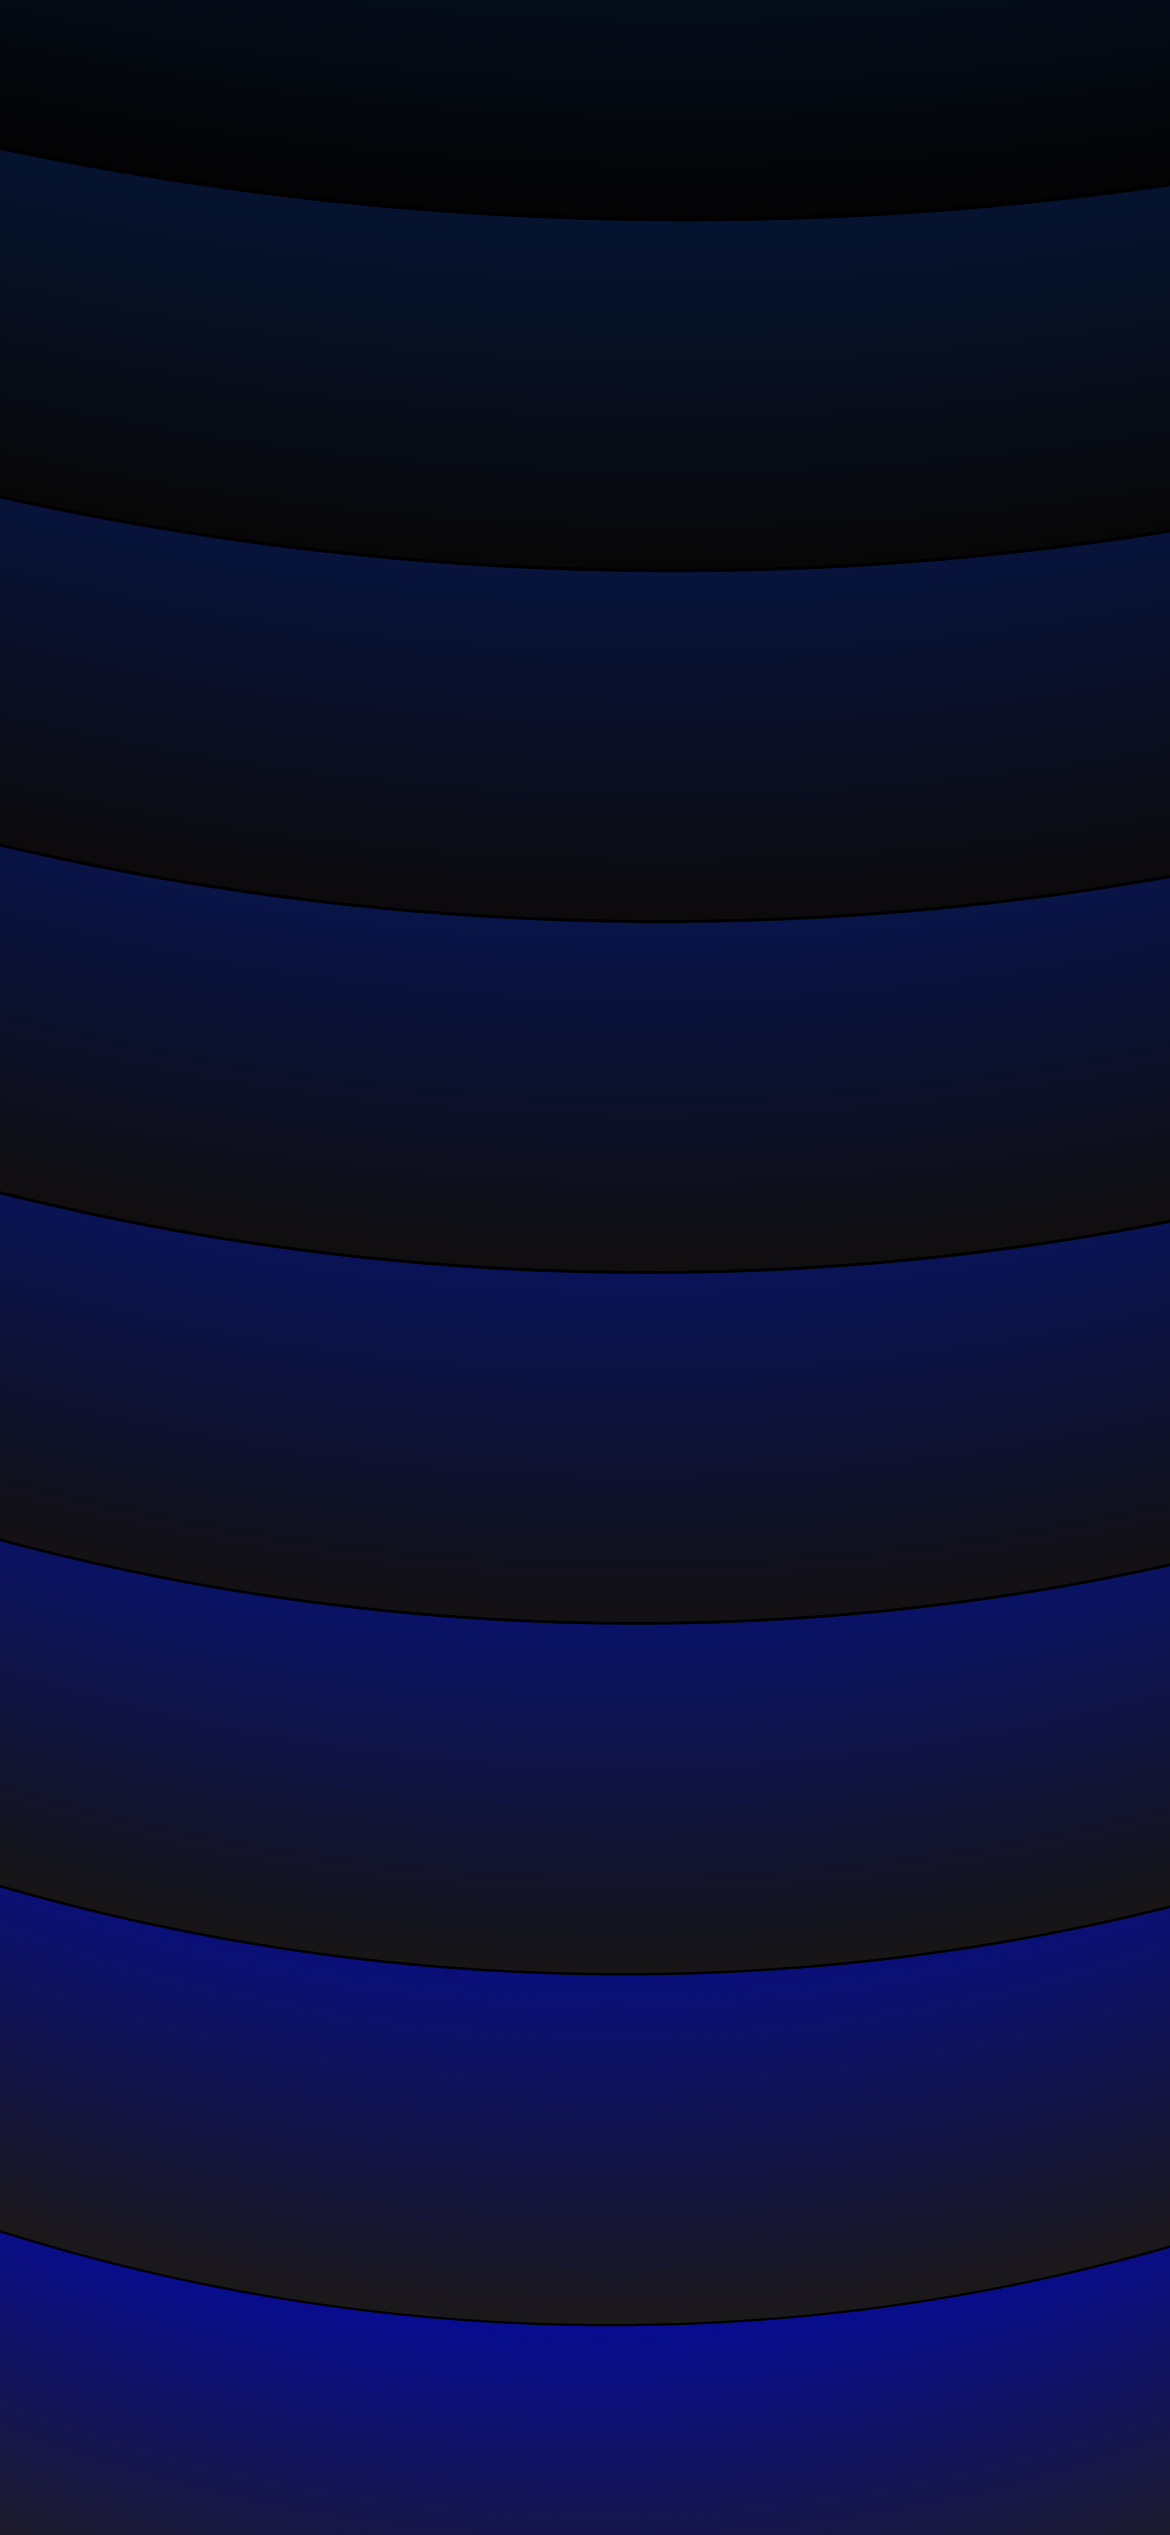 A ferris wheel at night photo  Free Smartphone wallpaper Image on Unsplash